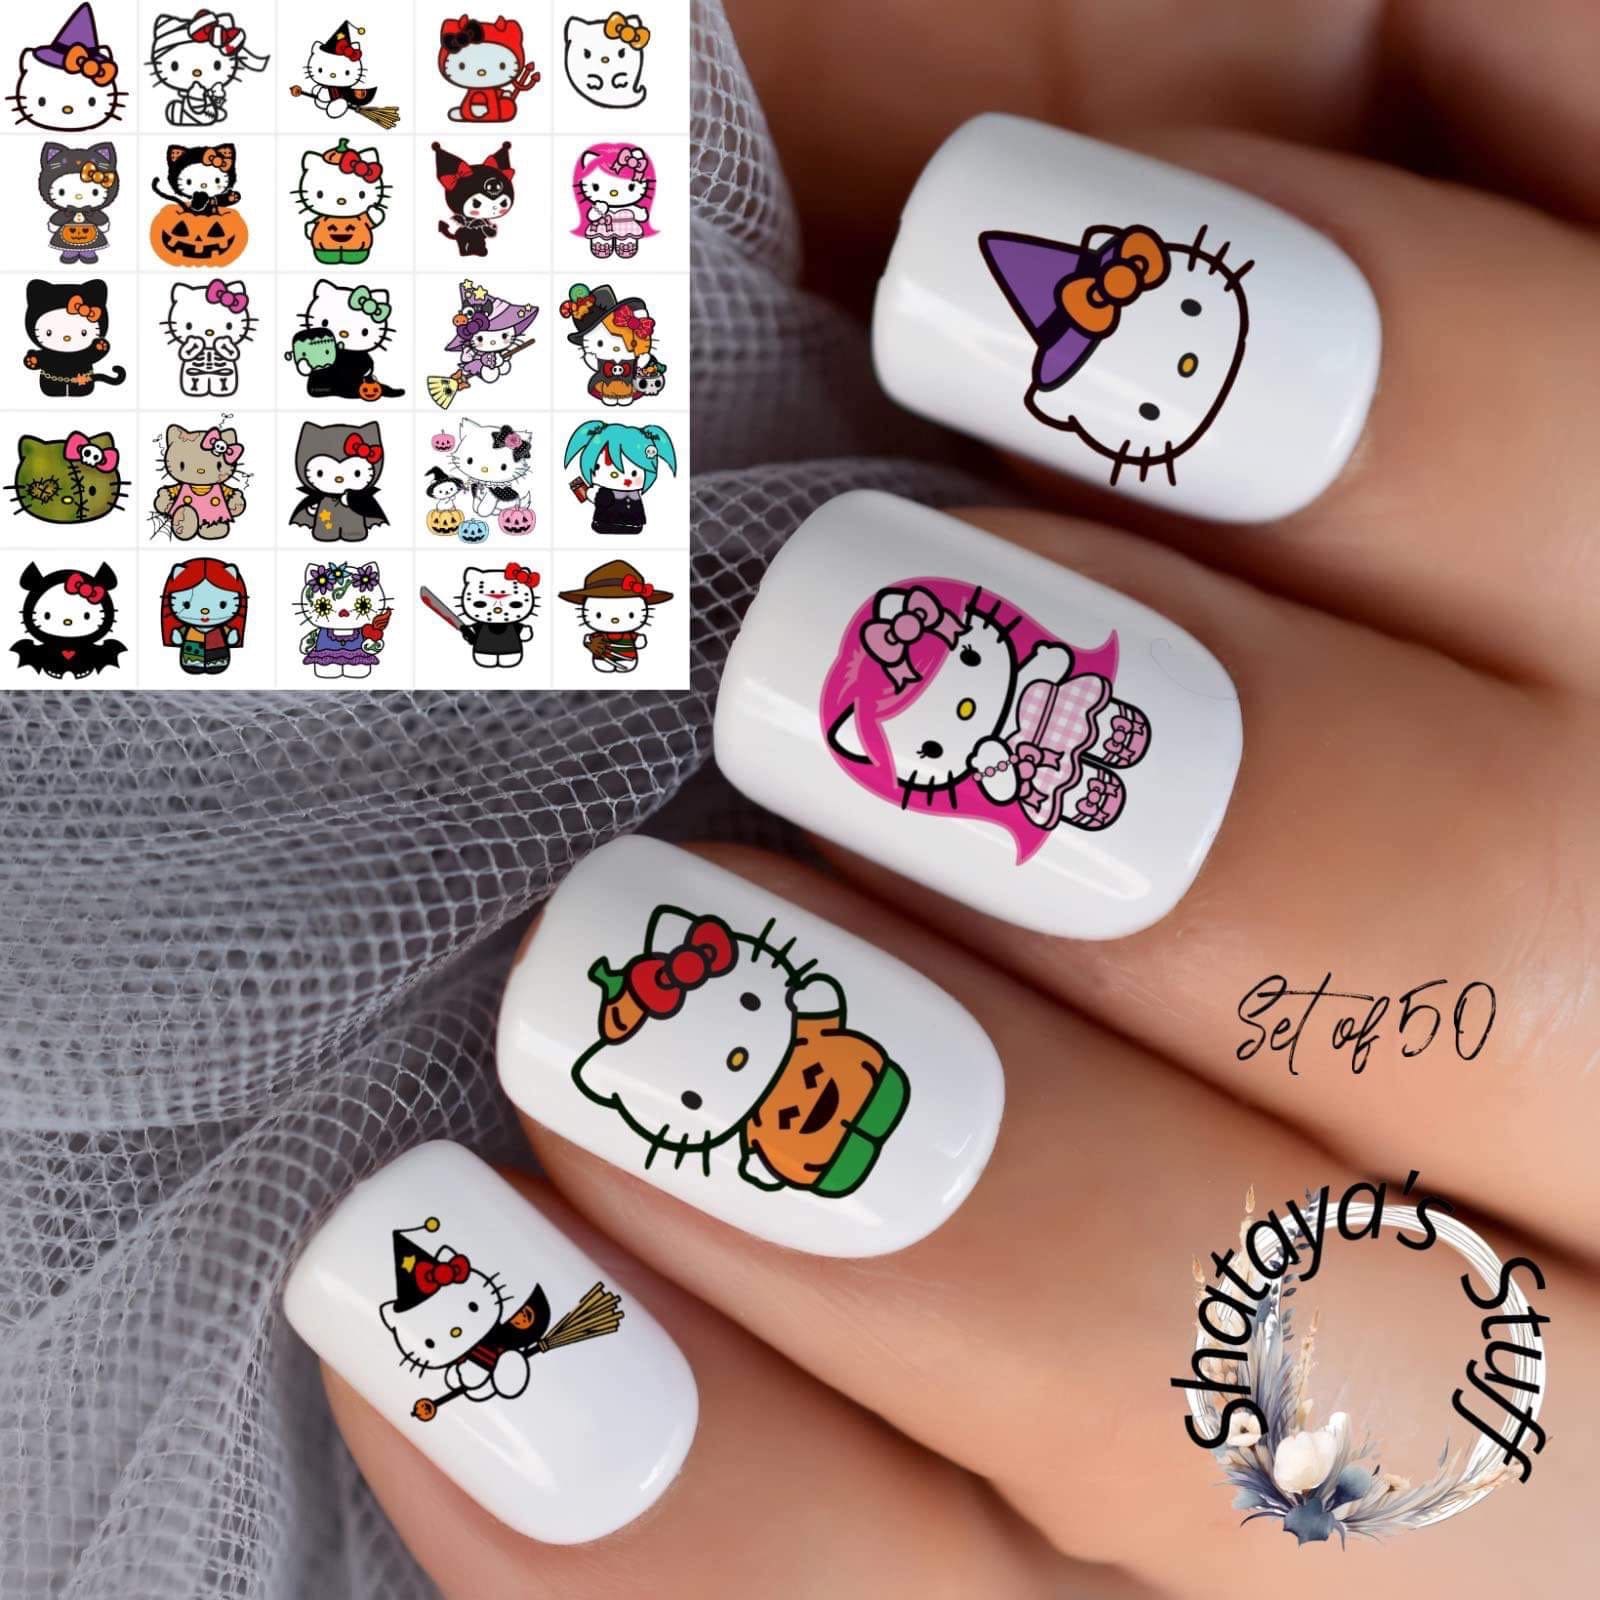  Hello Kitty Nail Art